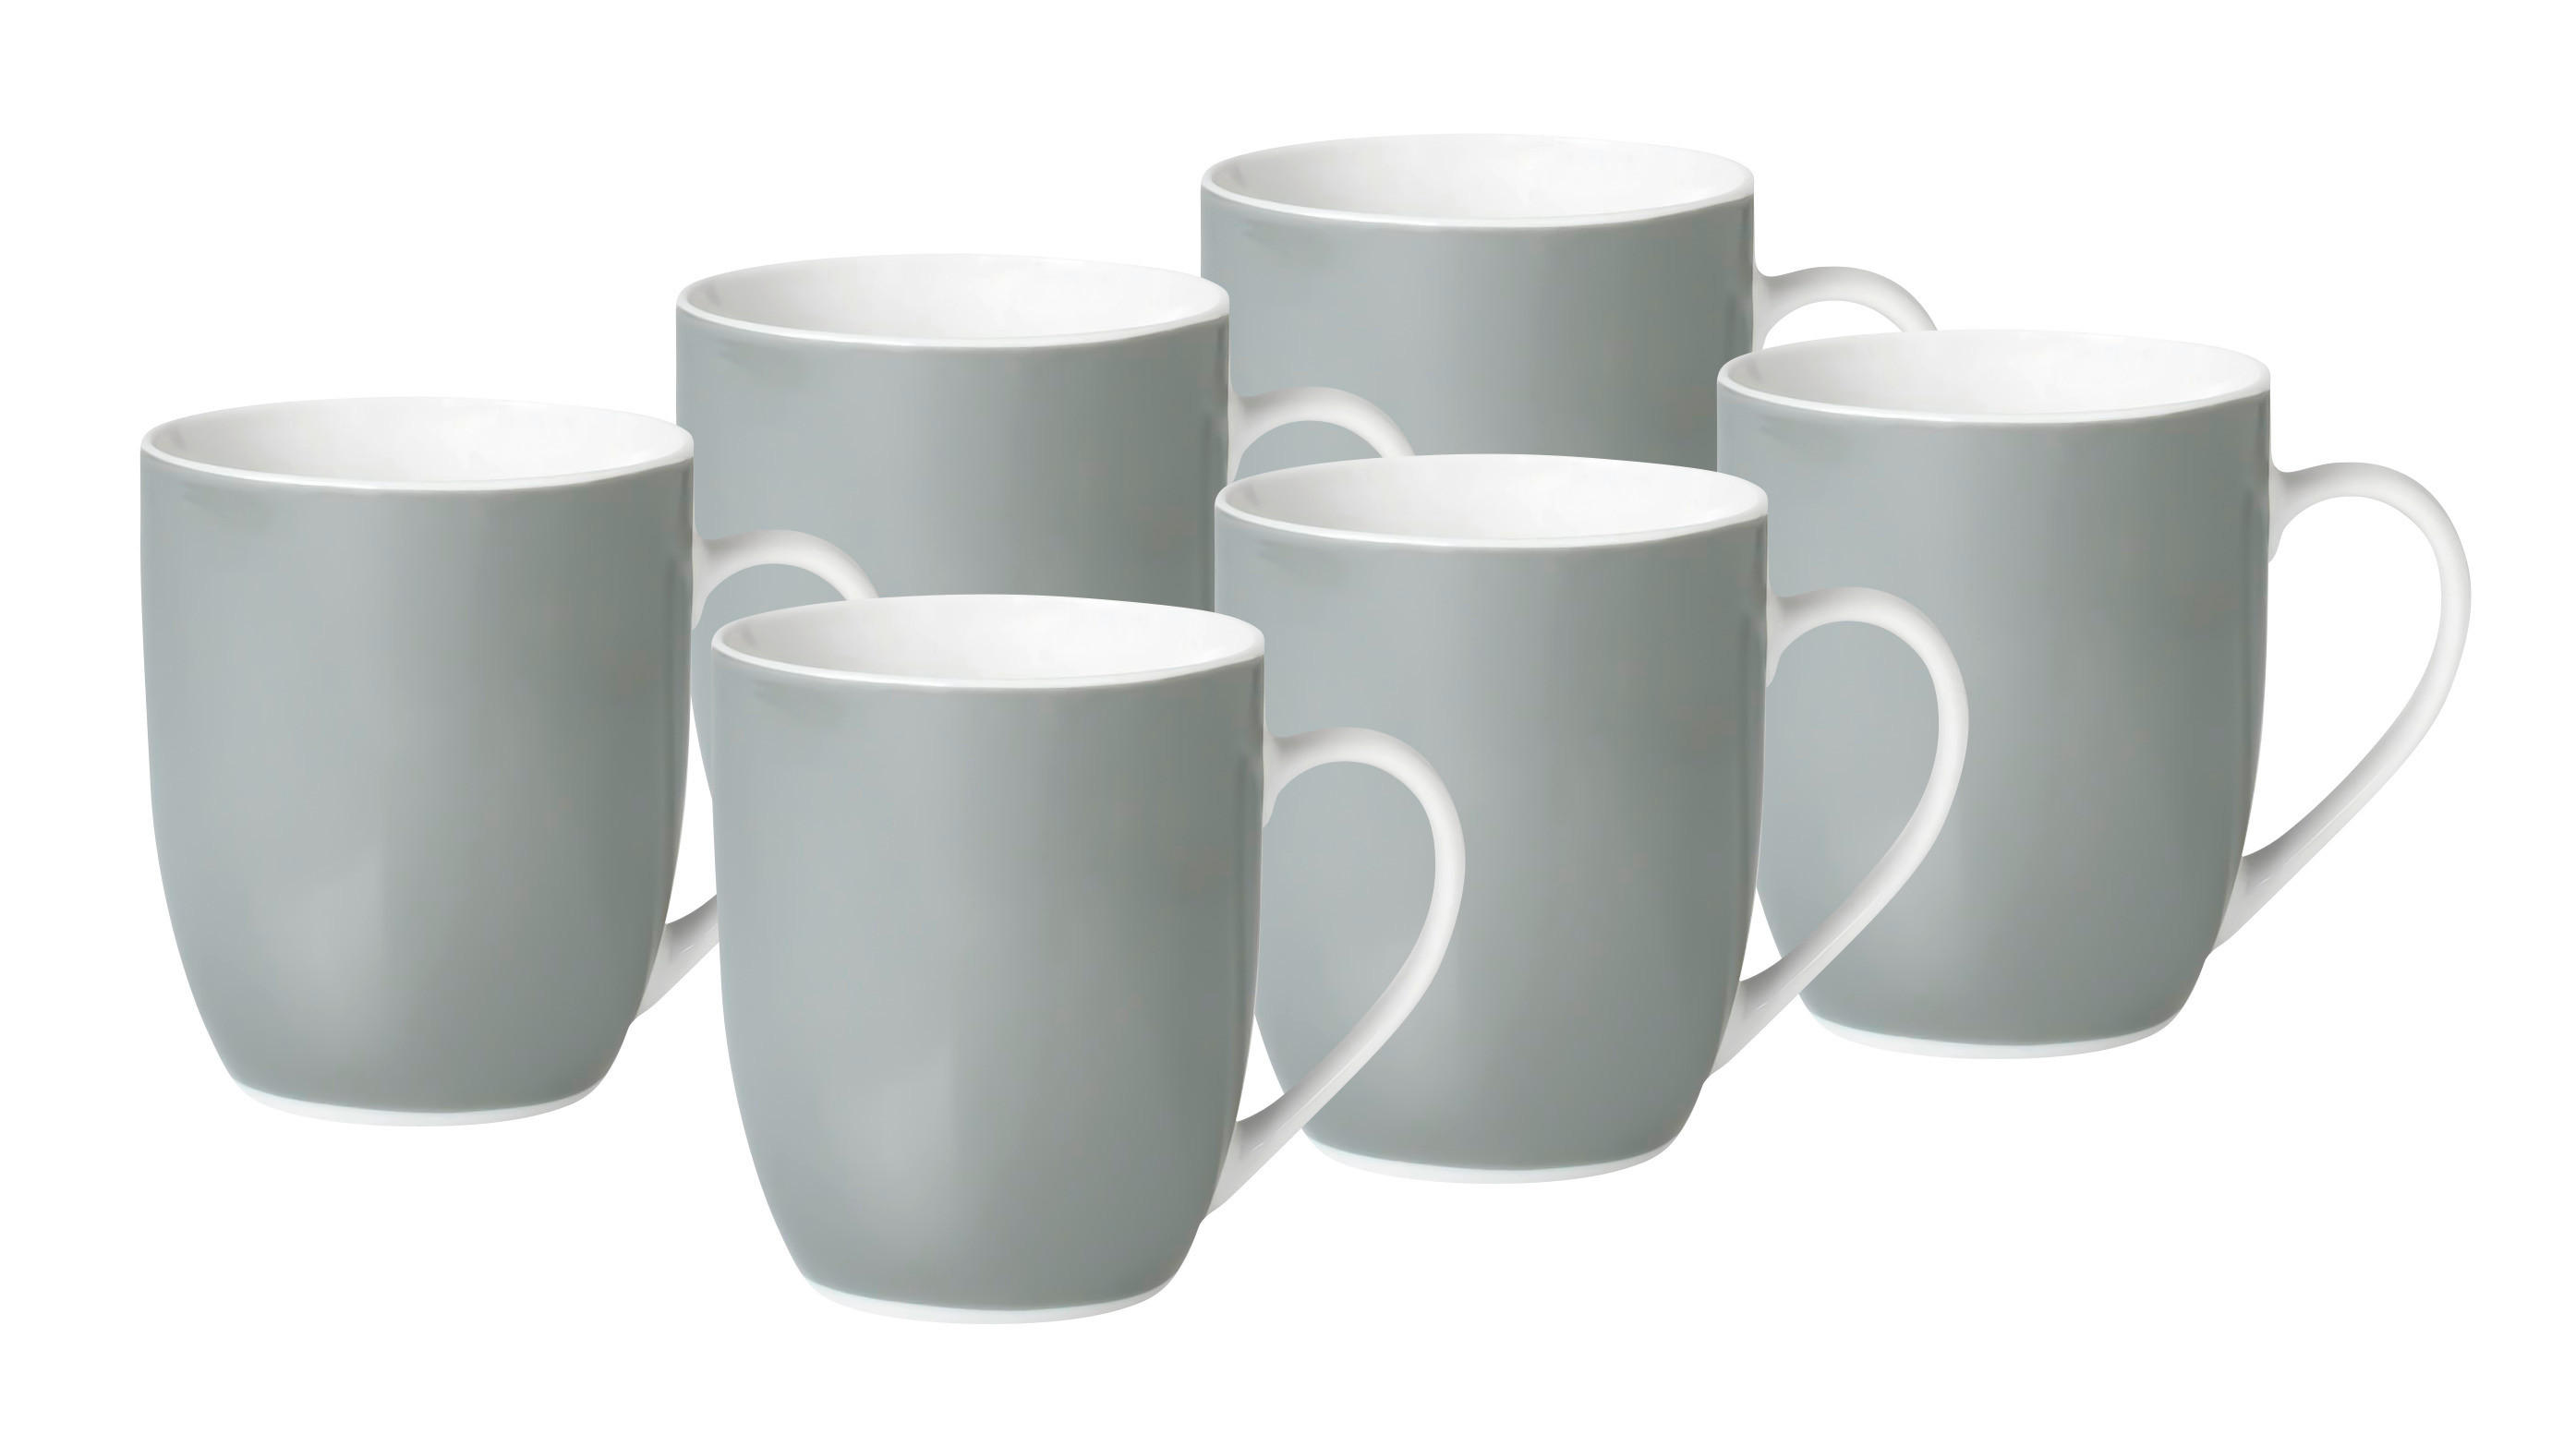 KAFFEEBECHERSET 6-teilig Keramik Porzellan Grau, Weiß  - Weiß/Grau, Basics, Keramik (11/10/8cm)